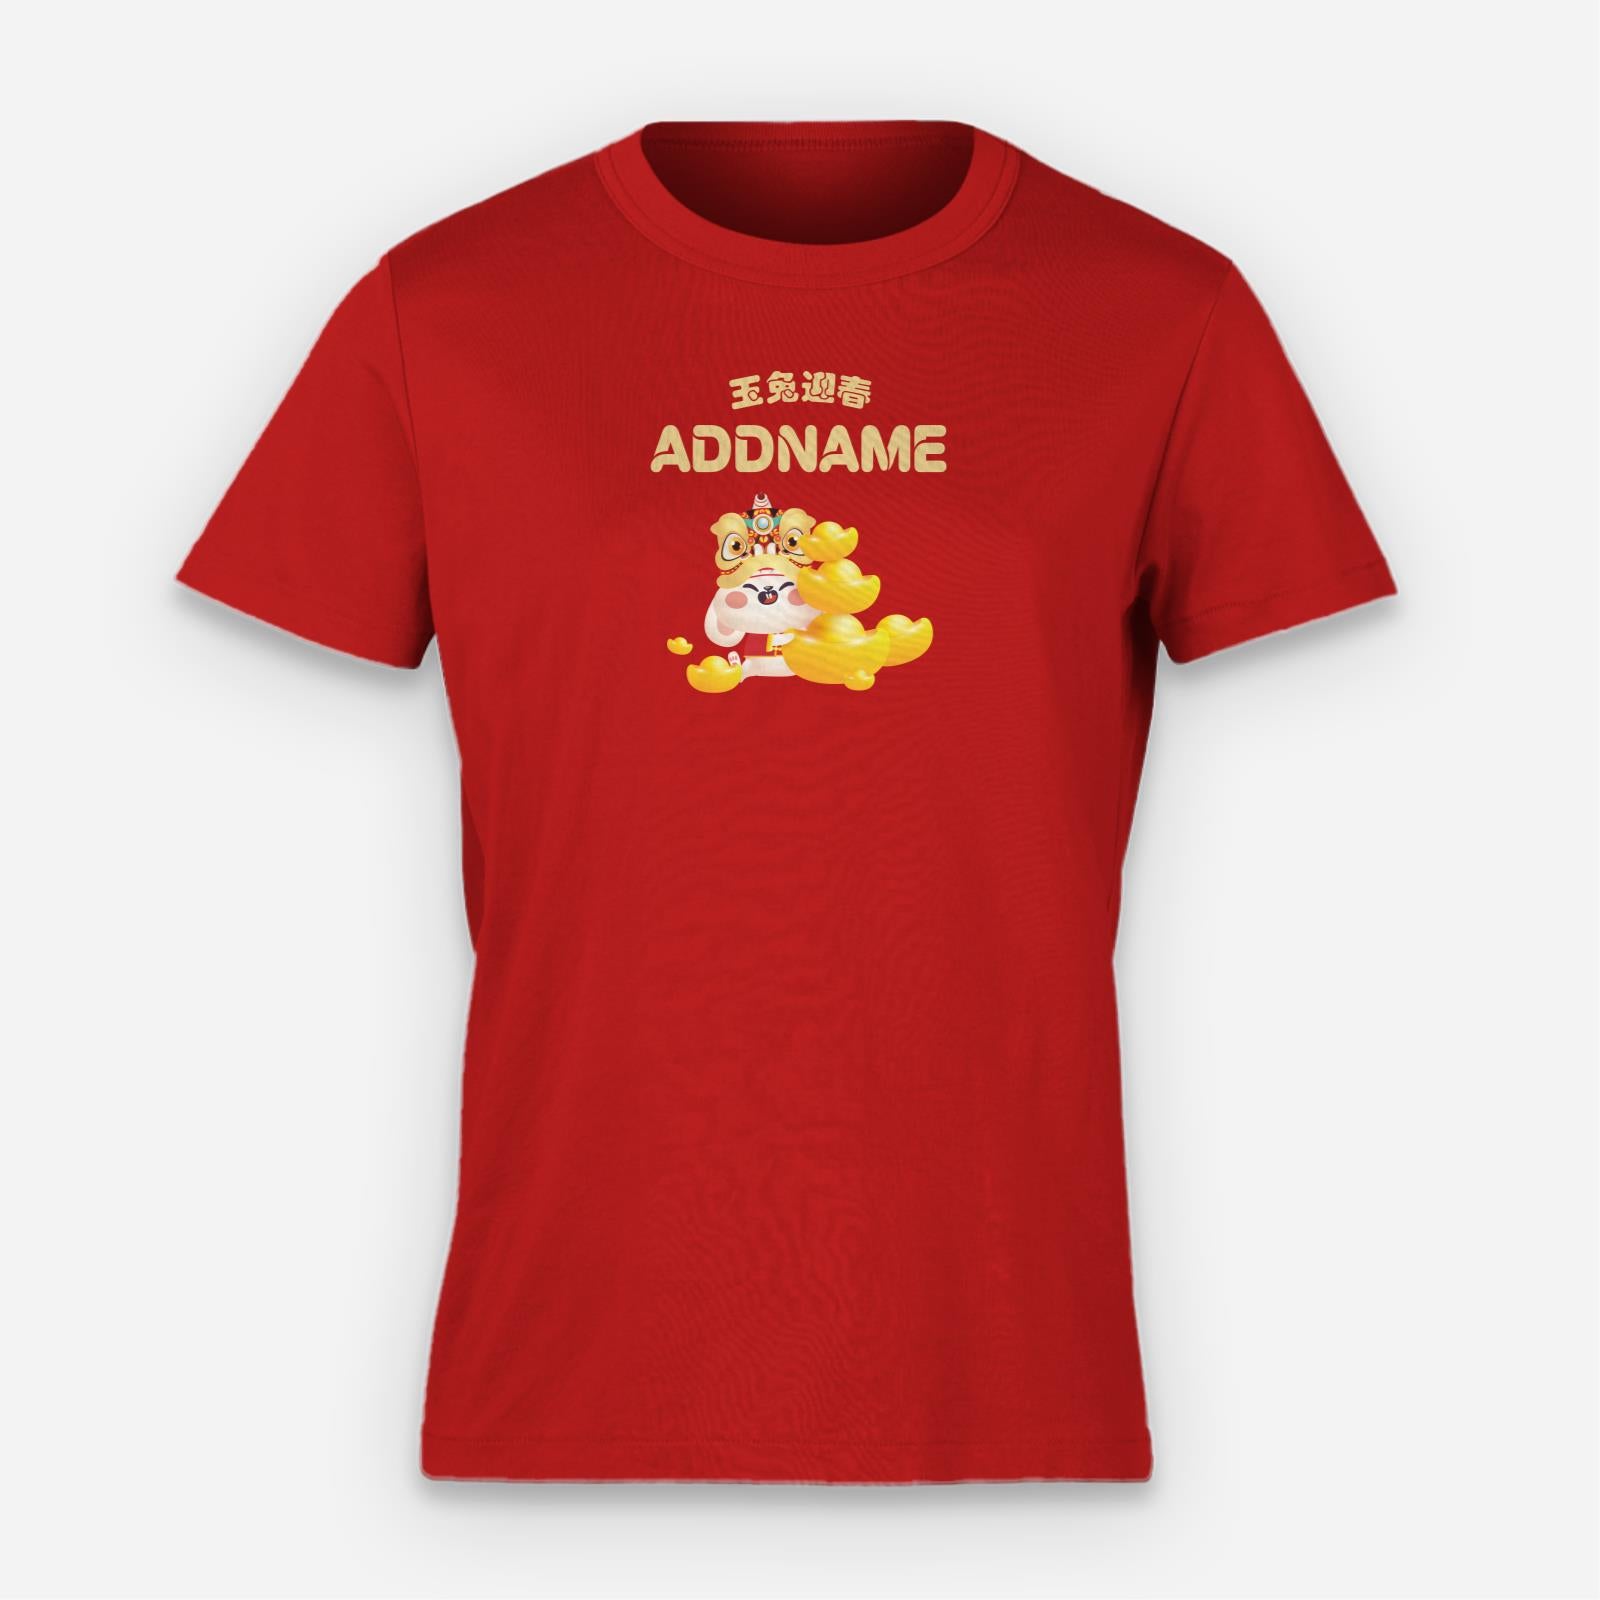 Cny Rabbit Family - Baby Rabbit Slim Fit Women Tee Shirt with English Personalization